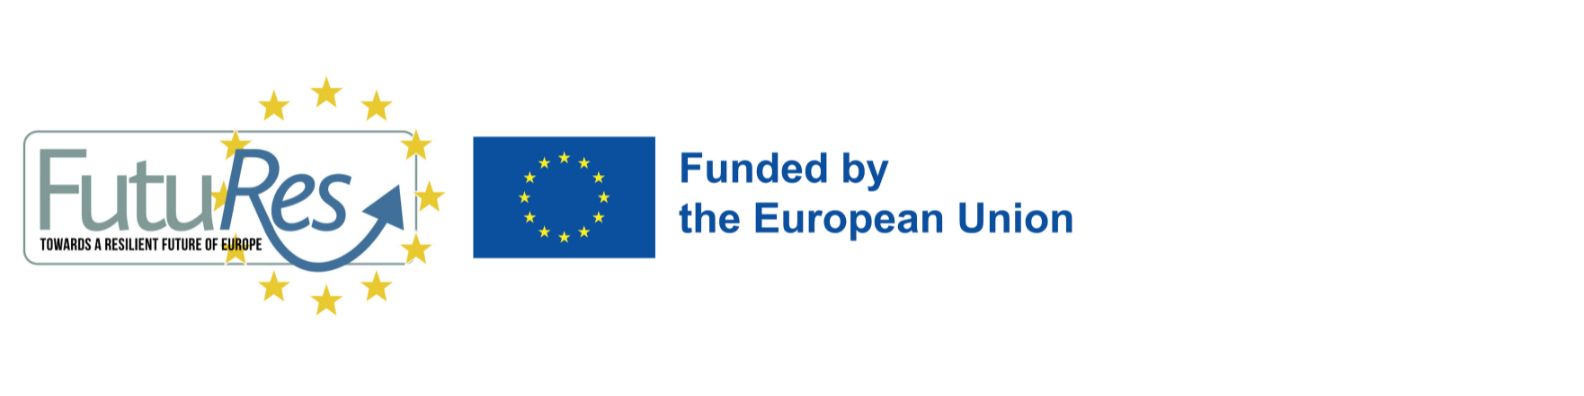 FutuRes Logo and Logo Funded by European Union, EU Flag